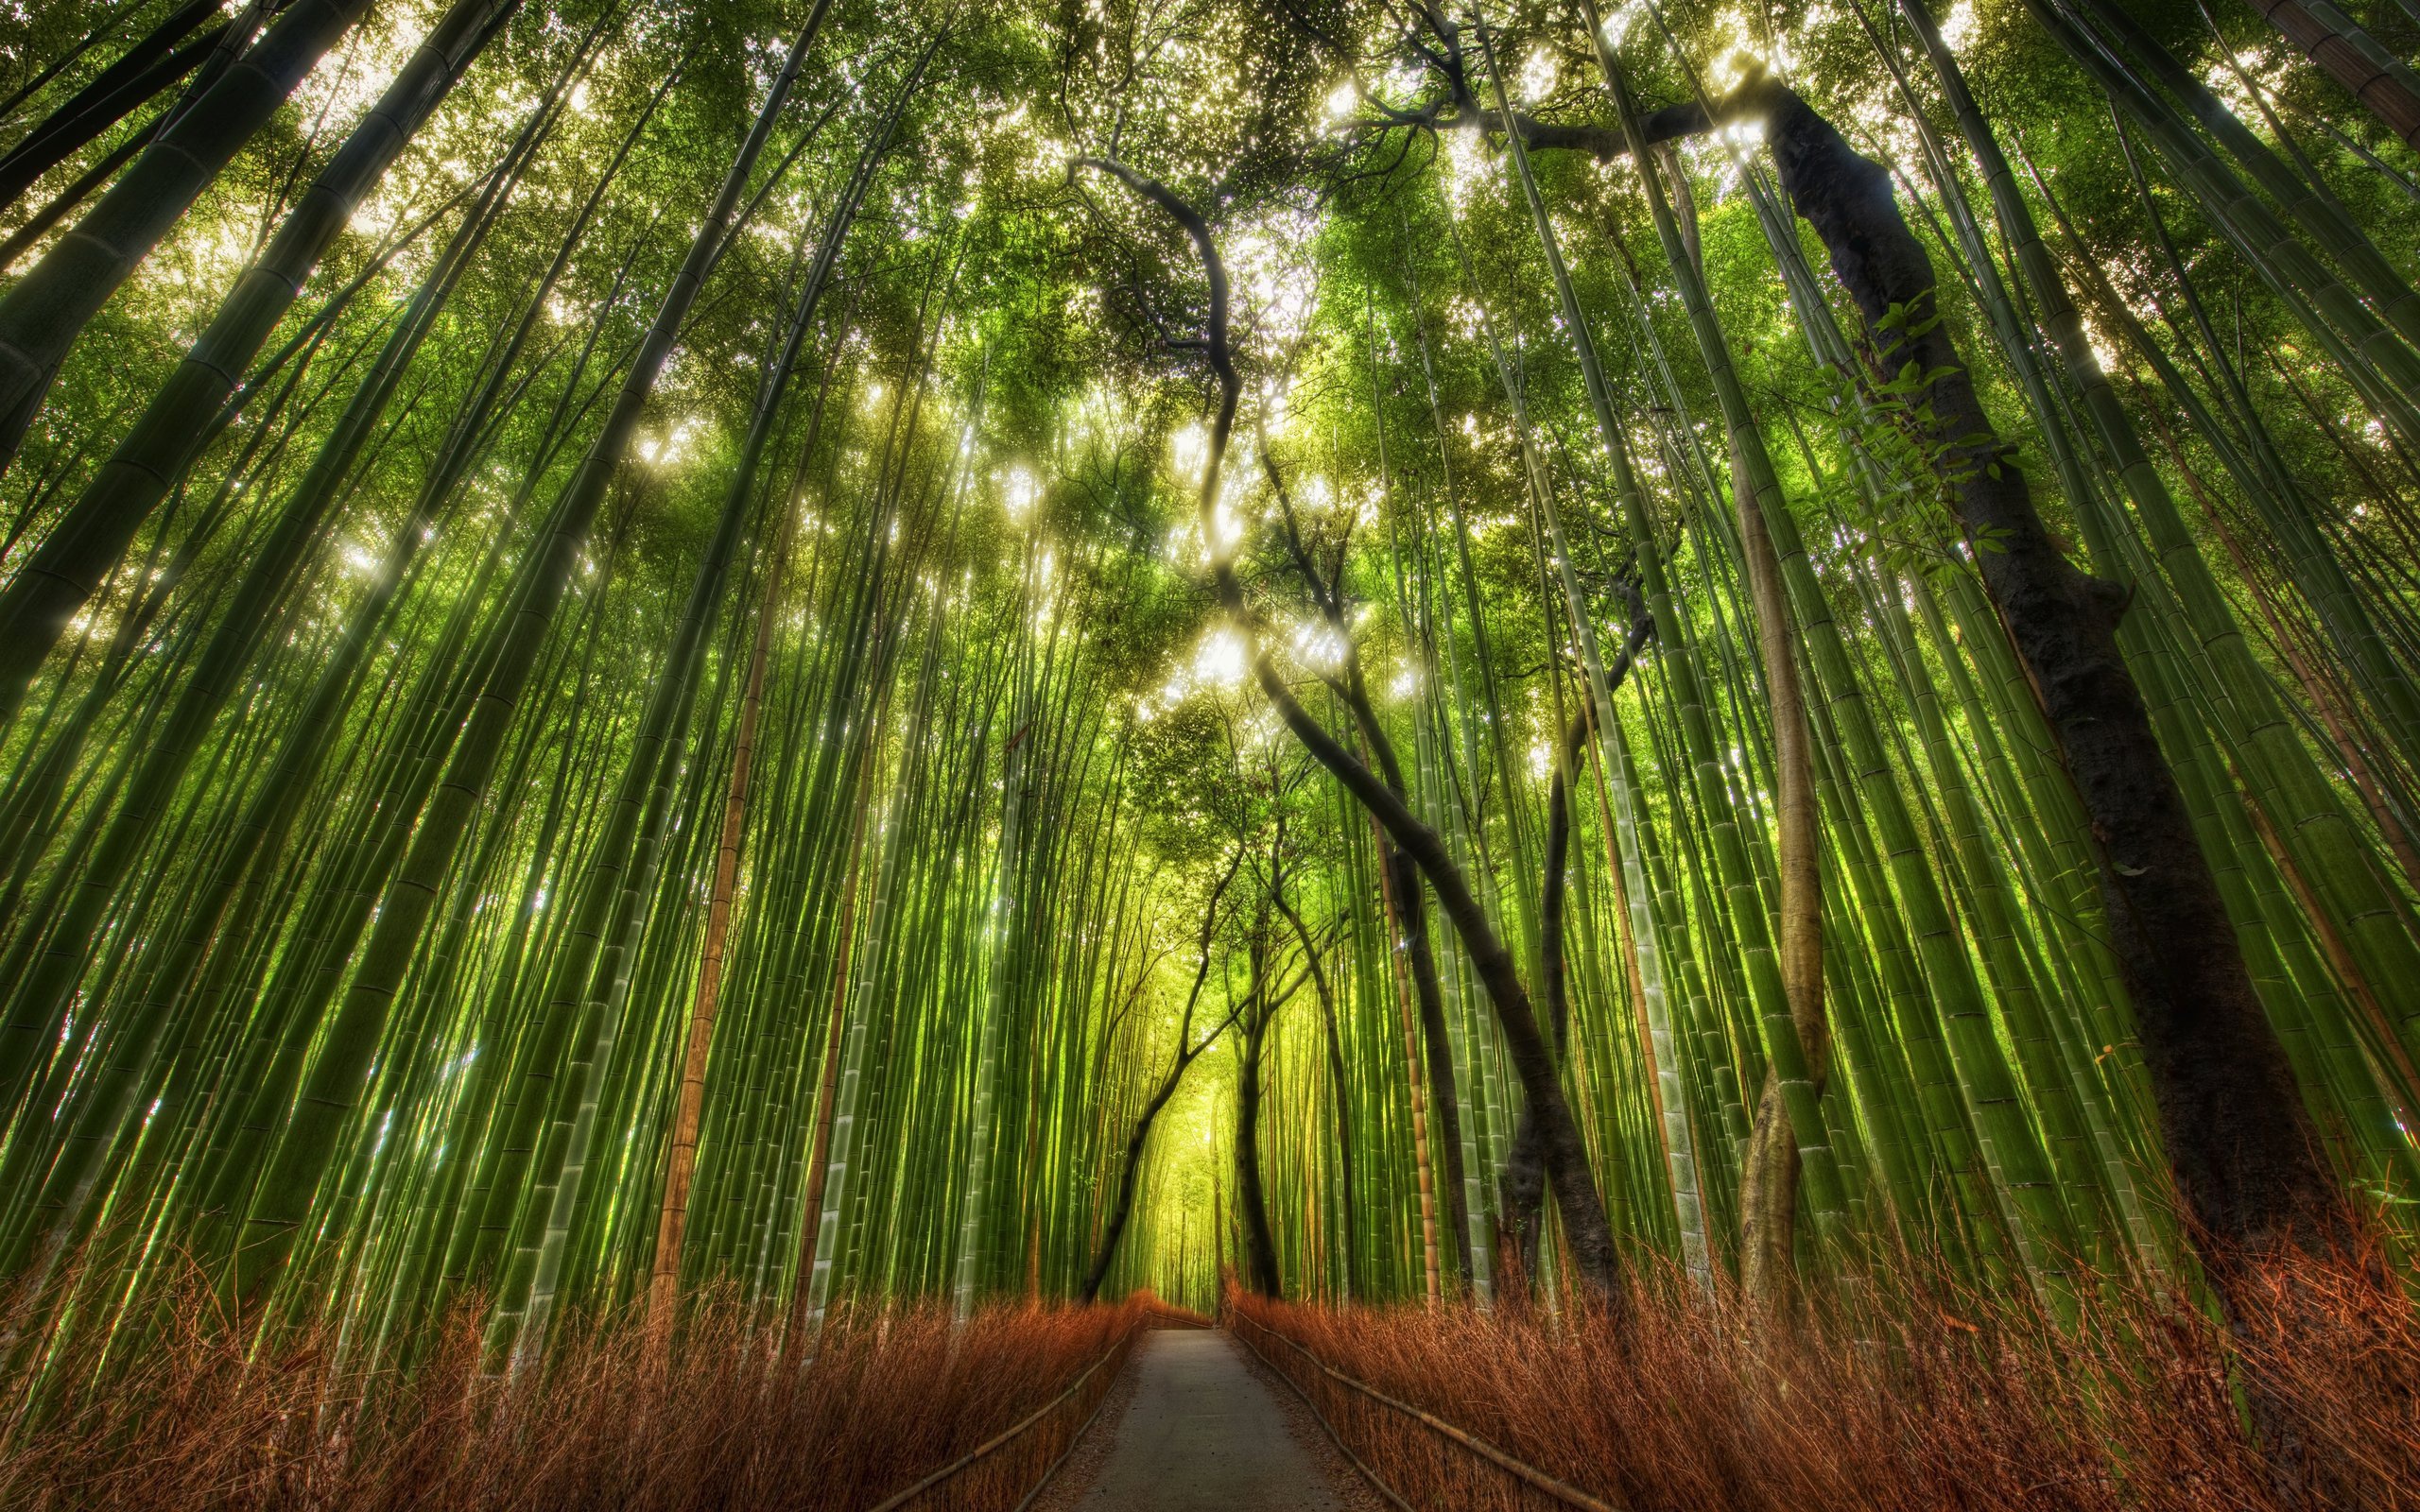 167418 descargar imagen tierra/naturaleza, bambú: fondos de pantalla y protectores de pantalla gratis